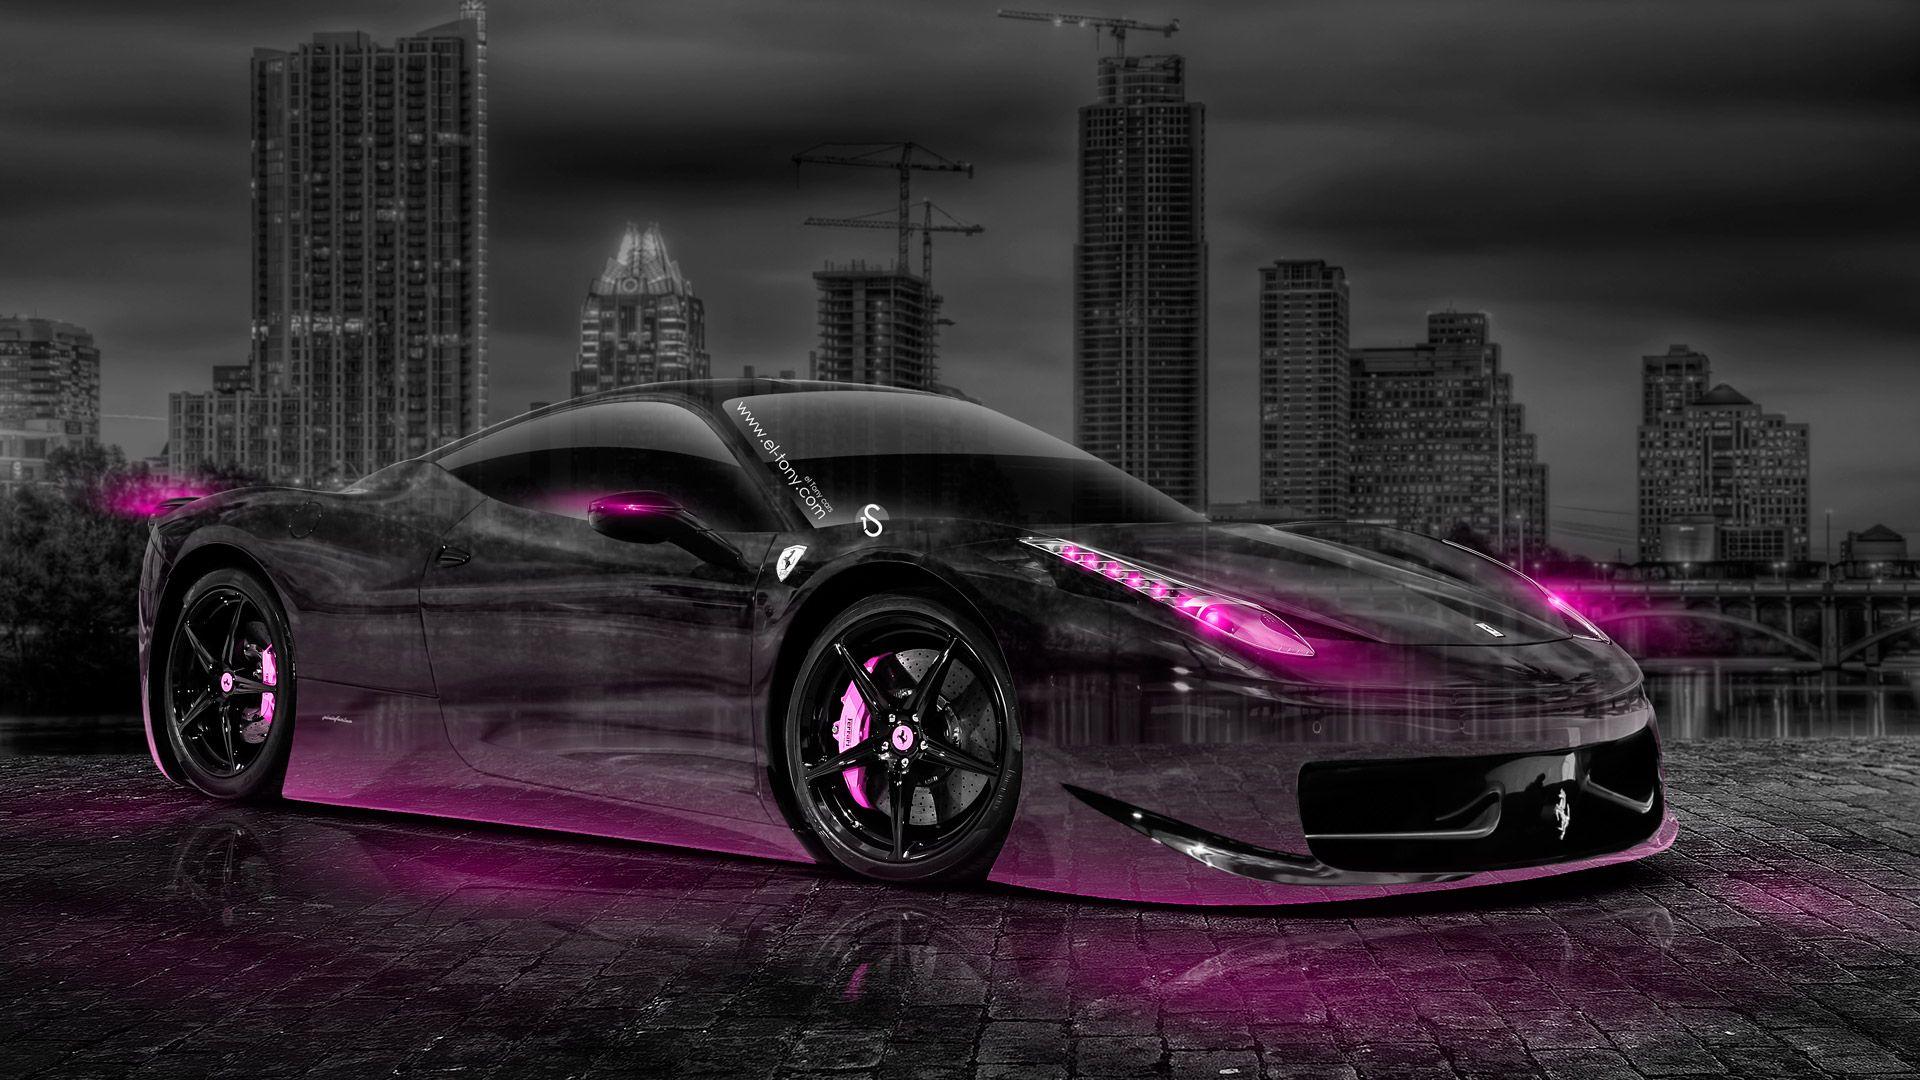 PinkR reflect,Ferrari-style car pk LifeW کар*UPgخllischvibs##3896 Live  Wallpaper - free download